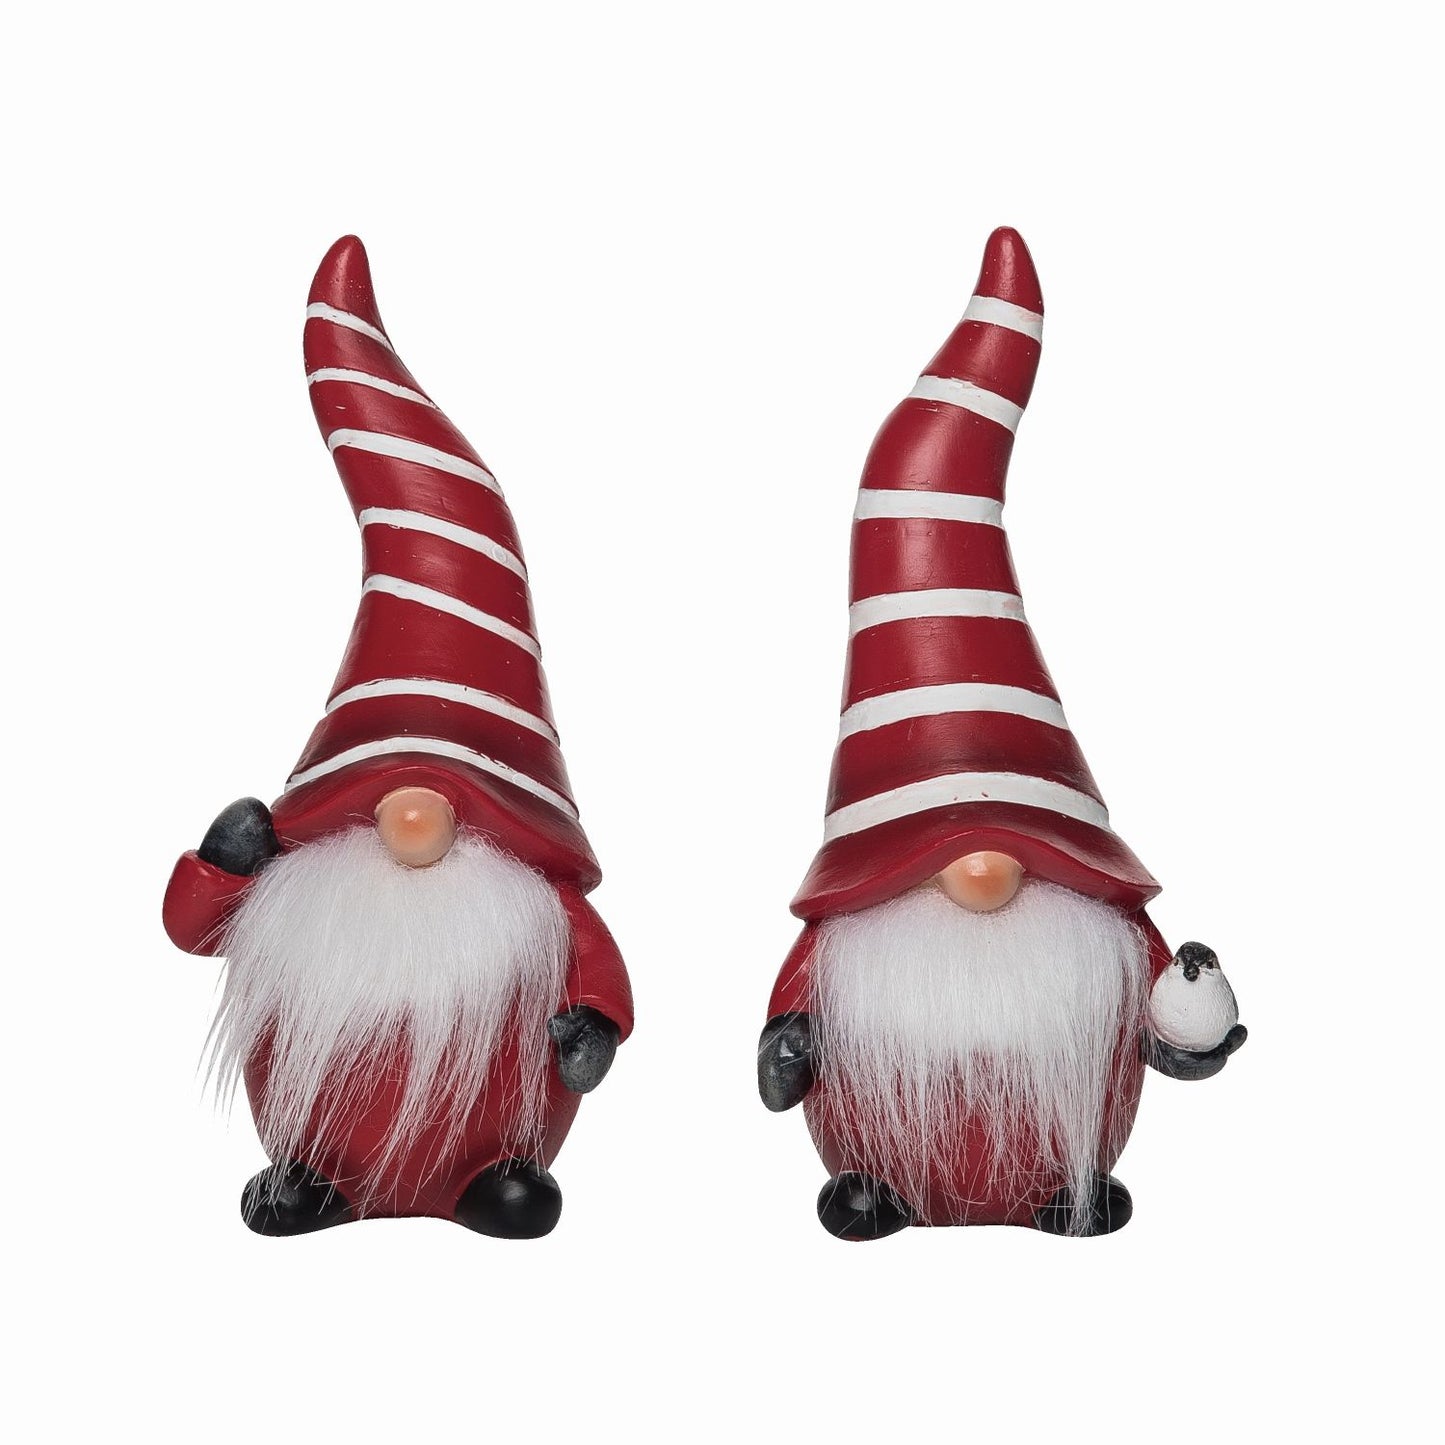 Transpac Resin Red/White Striped Gnome Decor, Set Of 2, Assortment